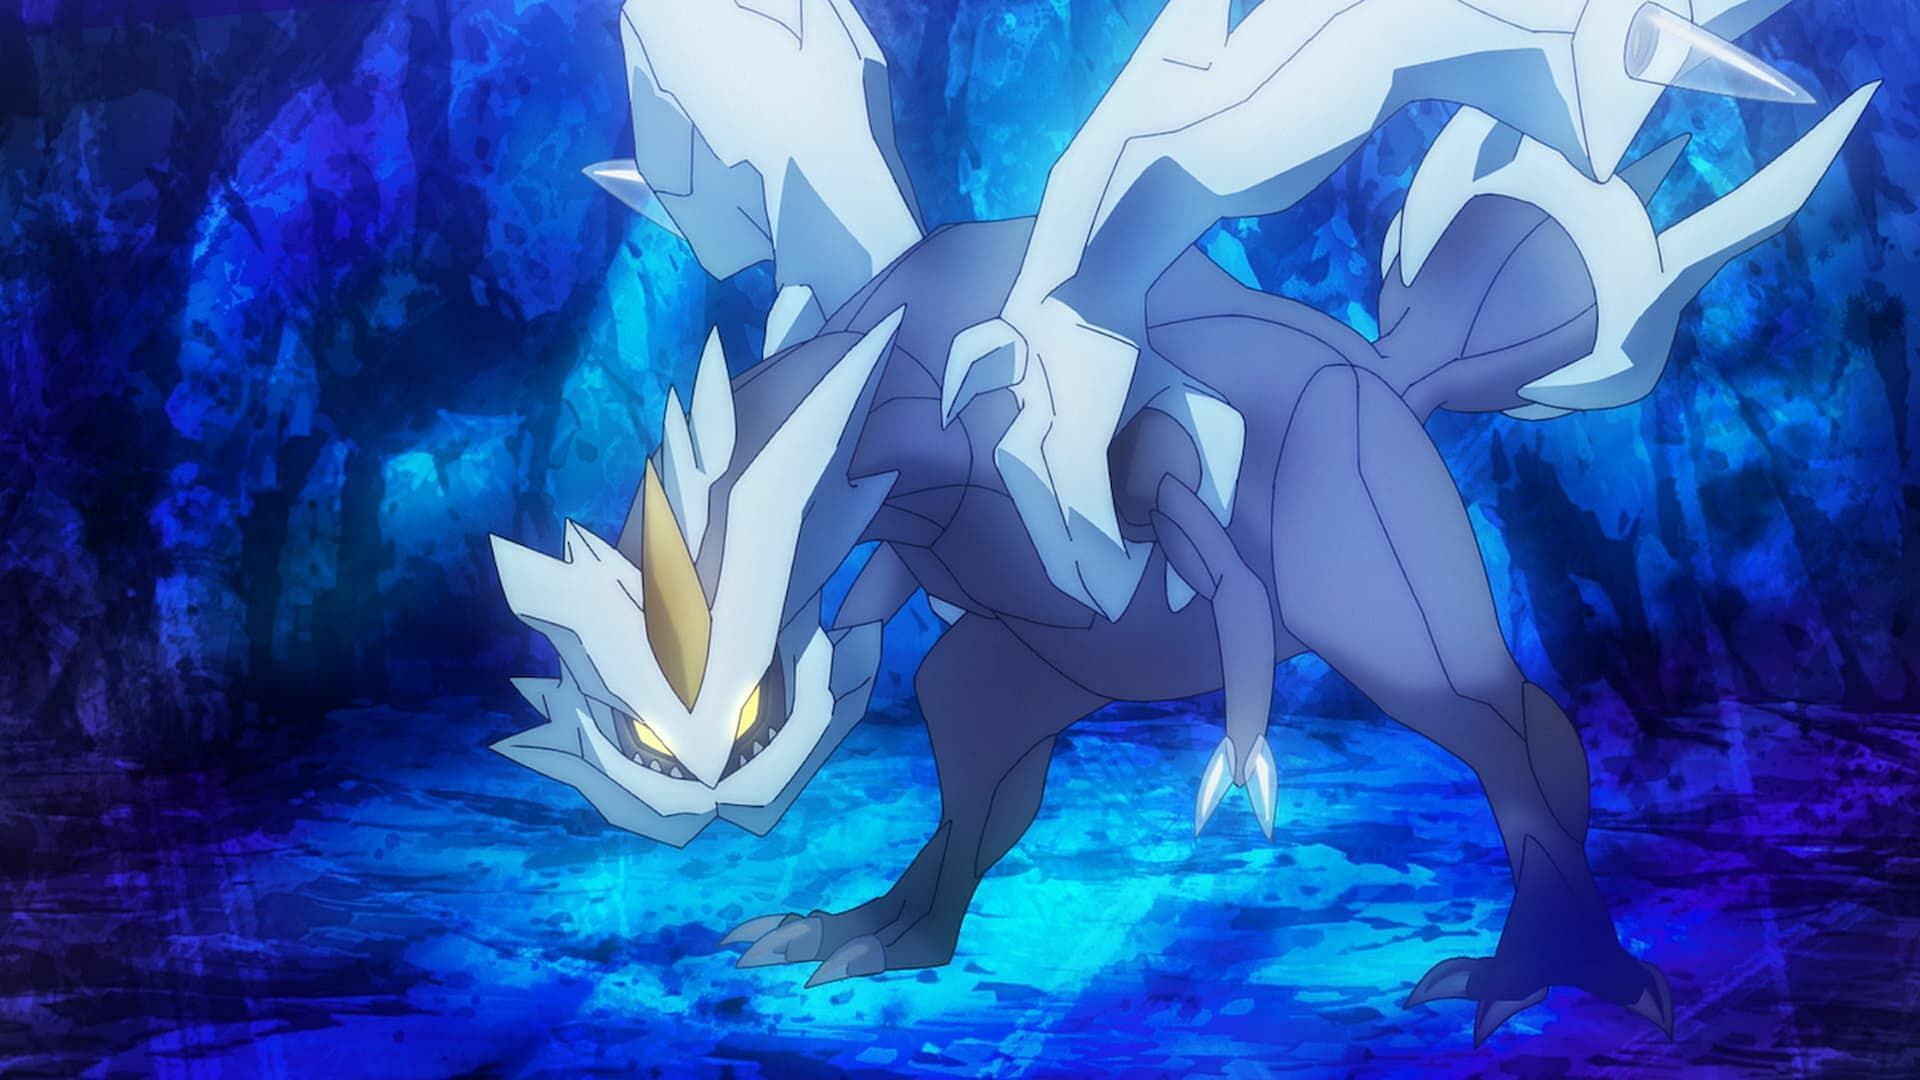 Kyurem in the anime (Image via The Pokemon Company)